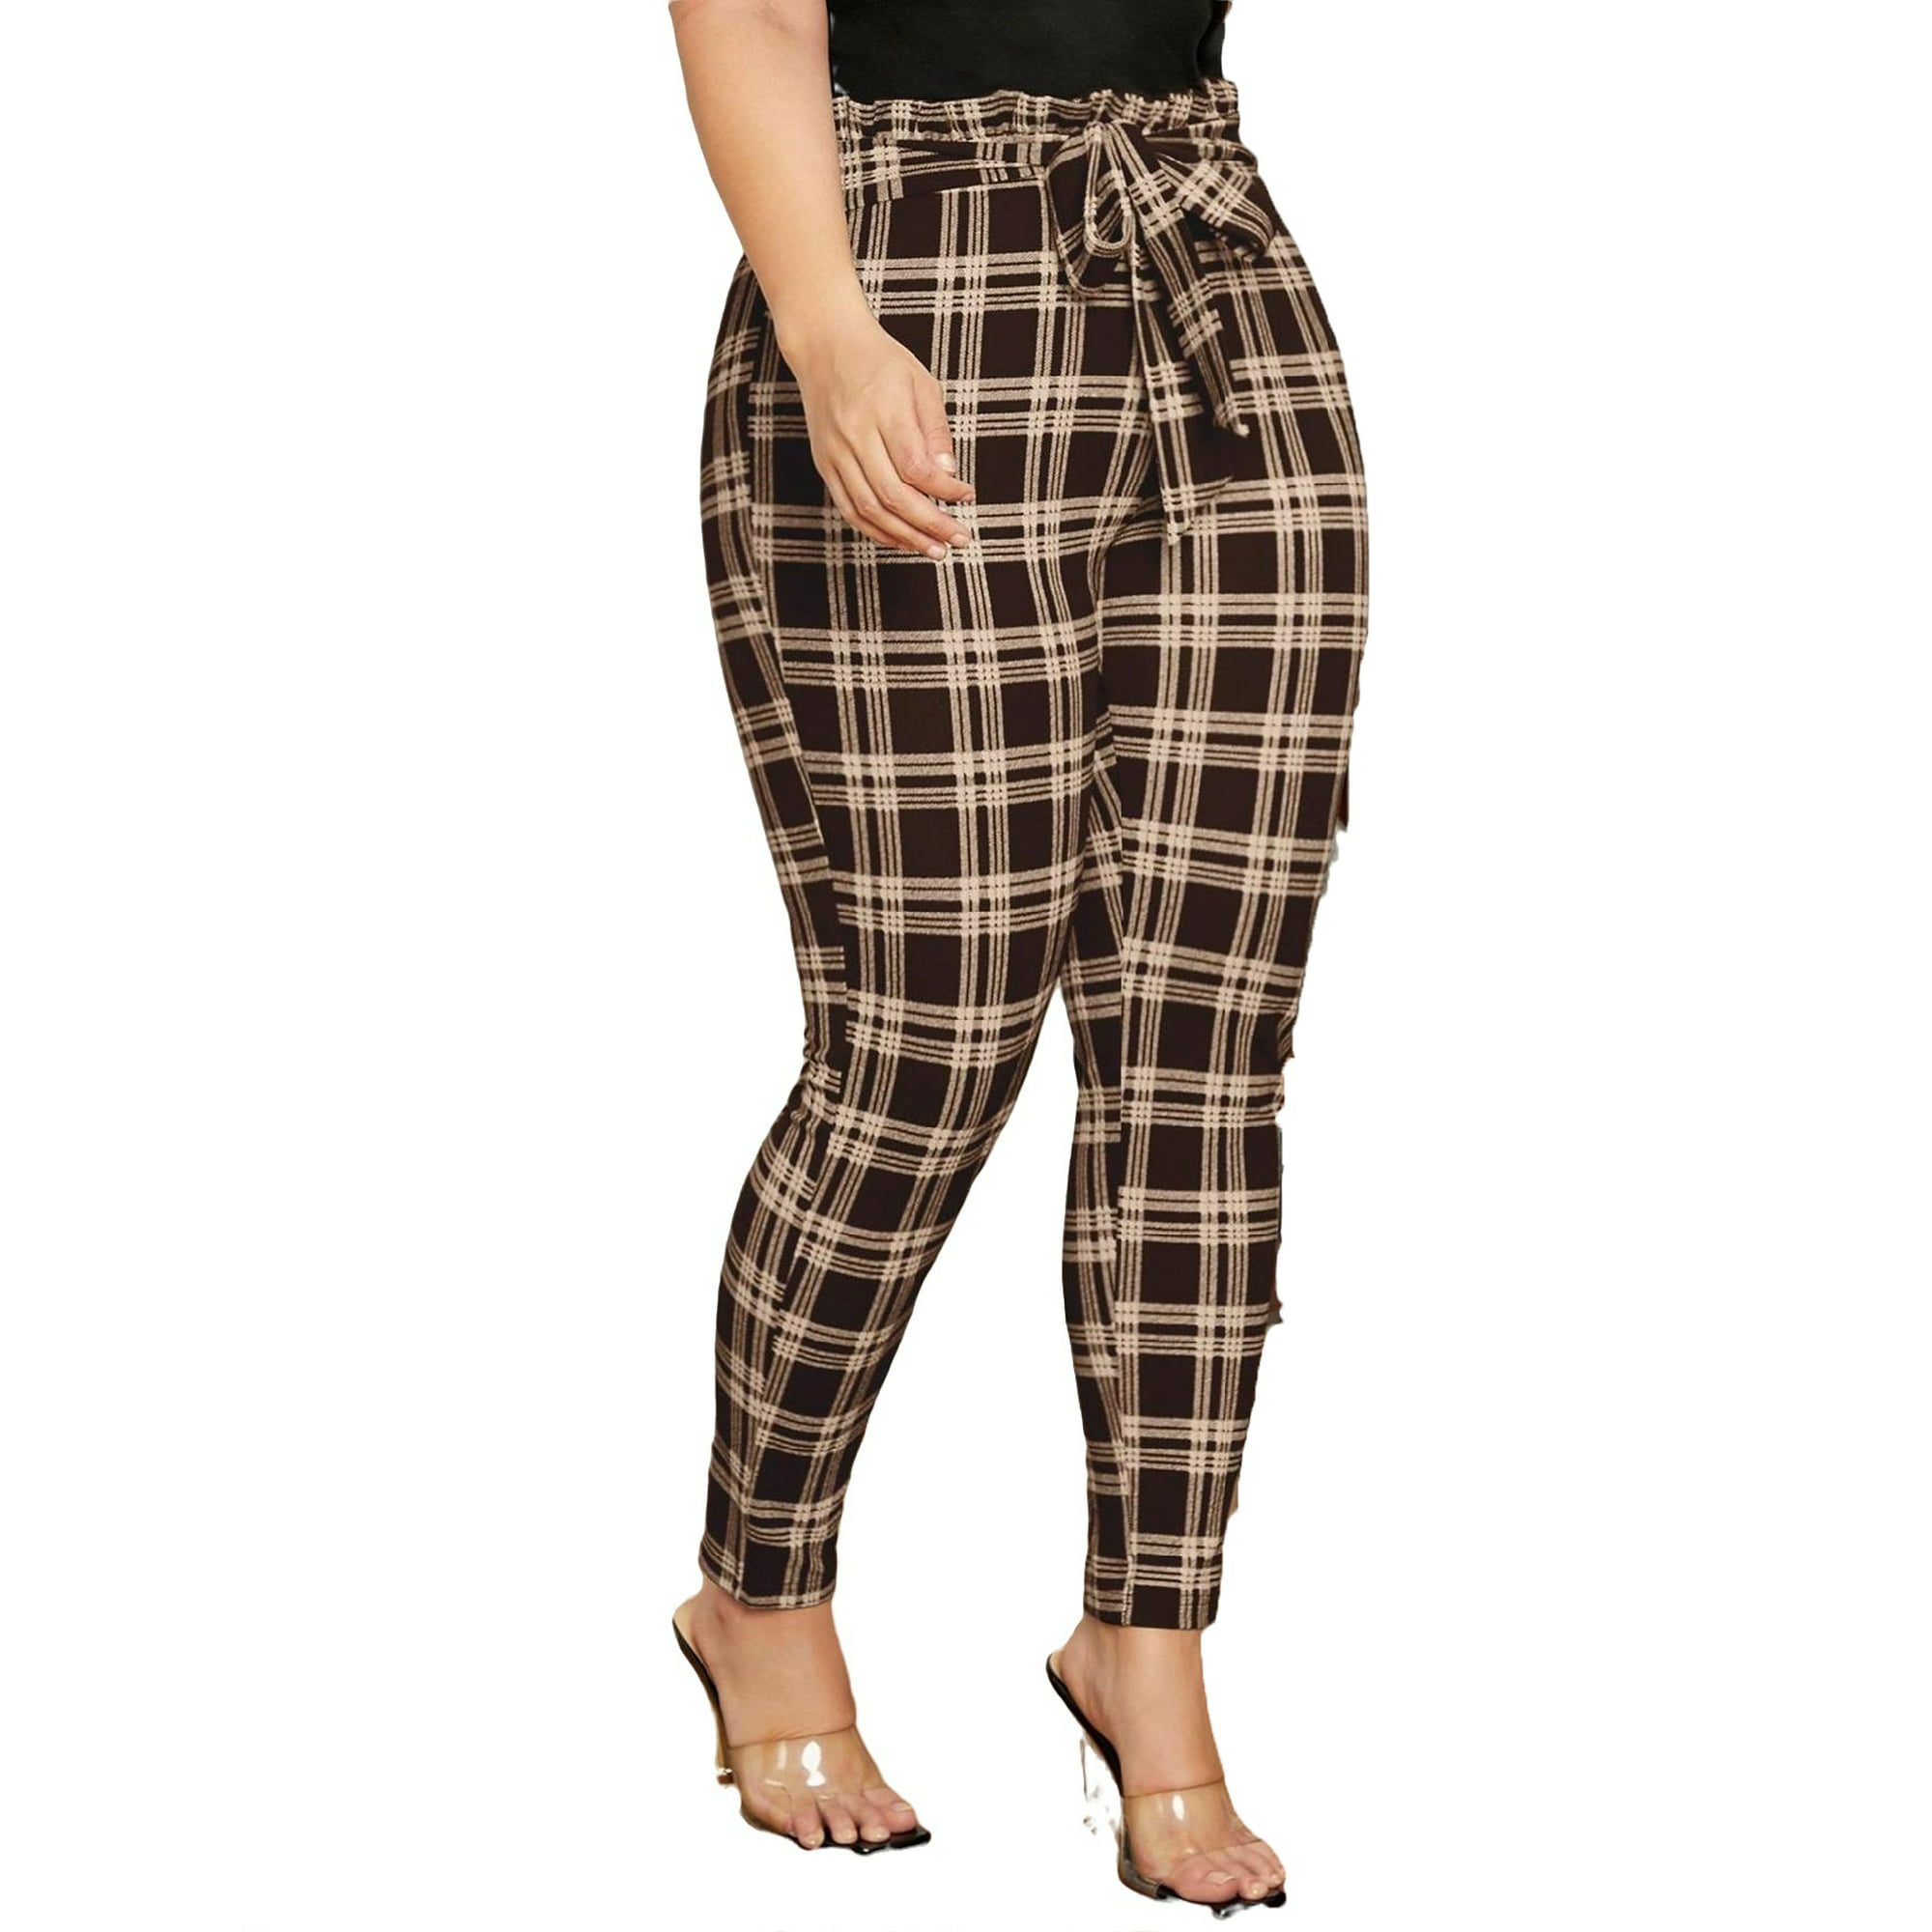 over Kvarter Oxide Casual Plaid Skinny Coffee Brown Plus Size Pants (Women's) - Walmart.com